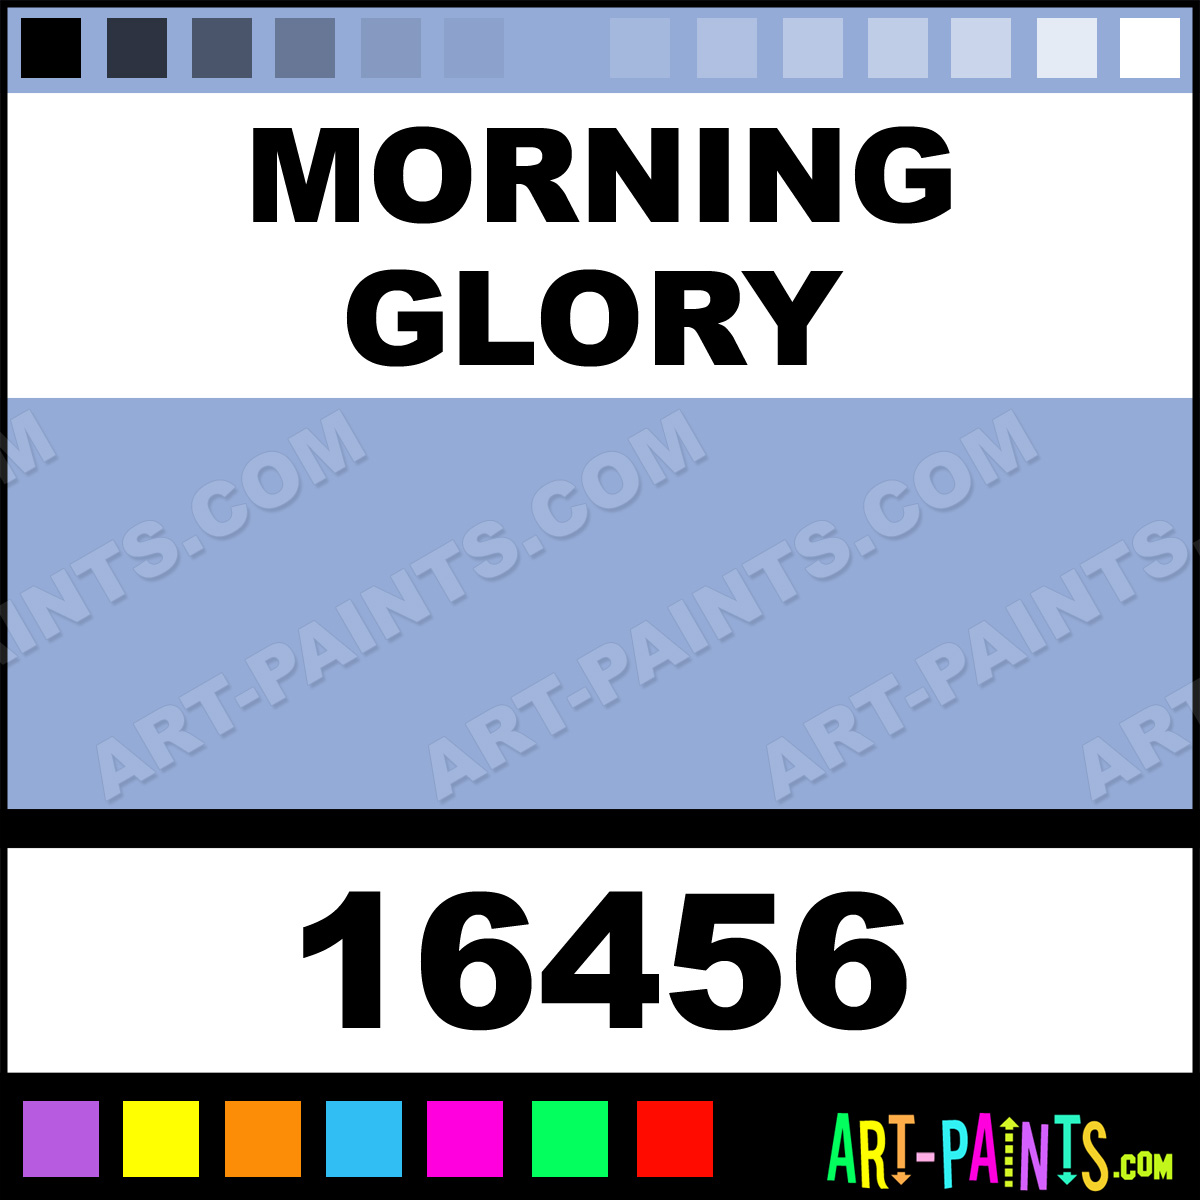 Morning-Glory-lg.jpg